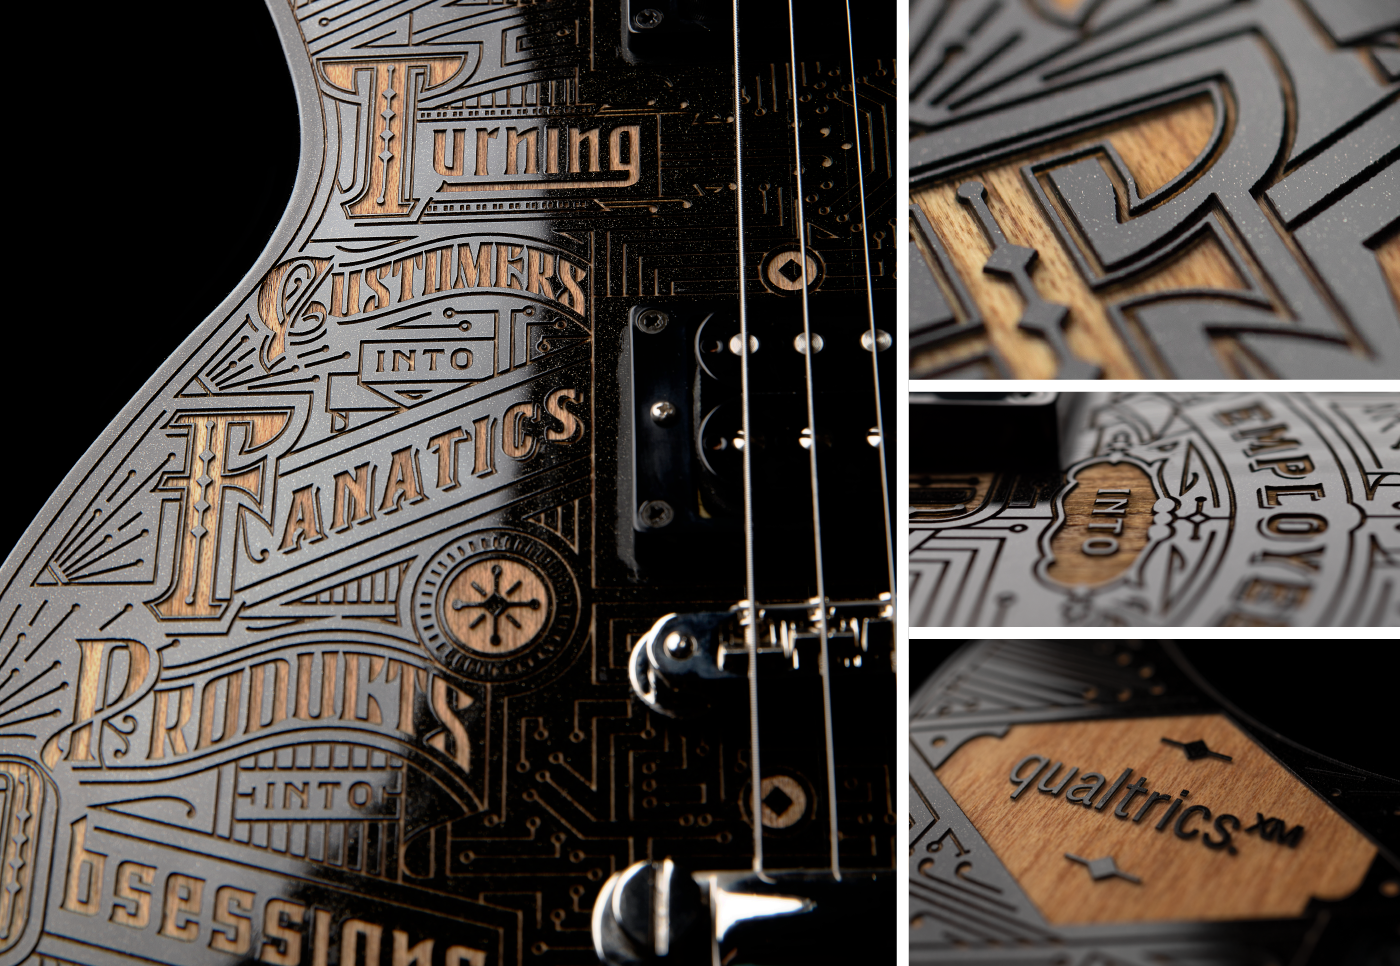 guitar typography   ILLUSTRATION  award graphic design  etching qualtrics instrument